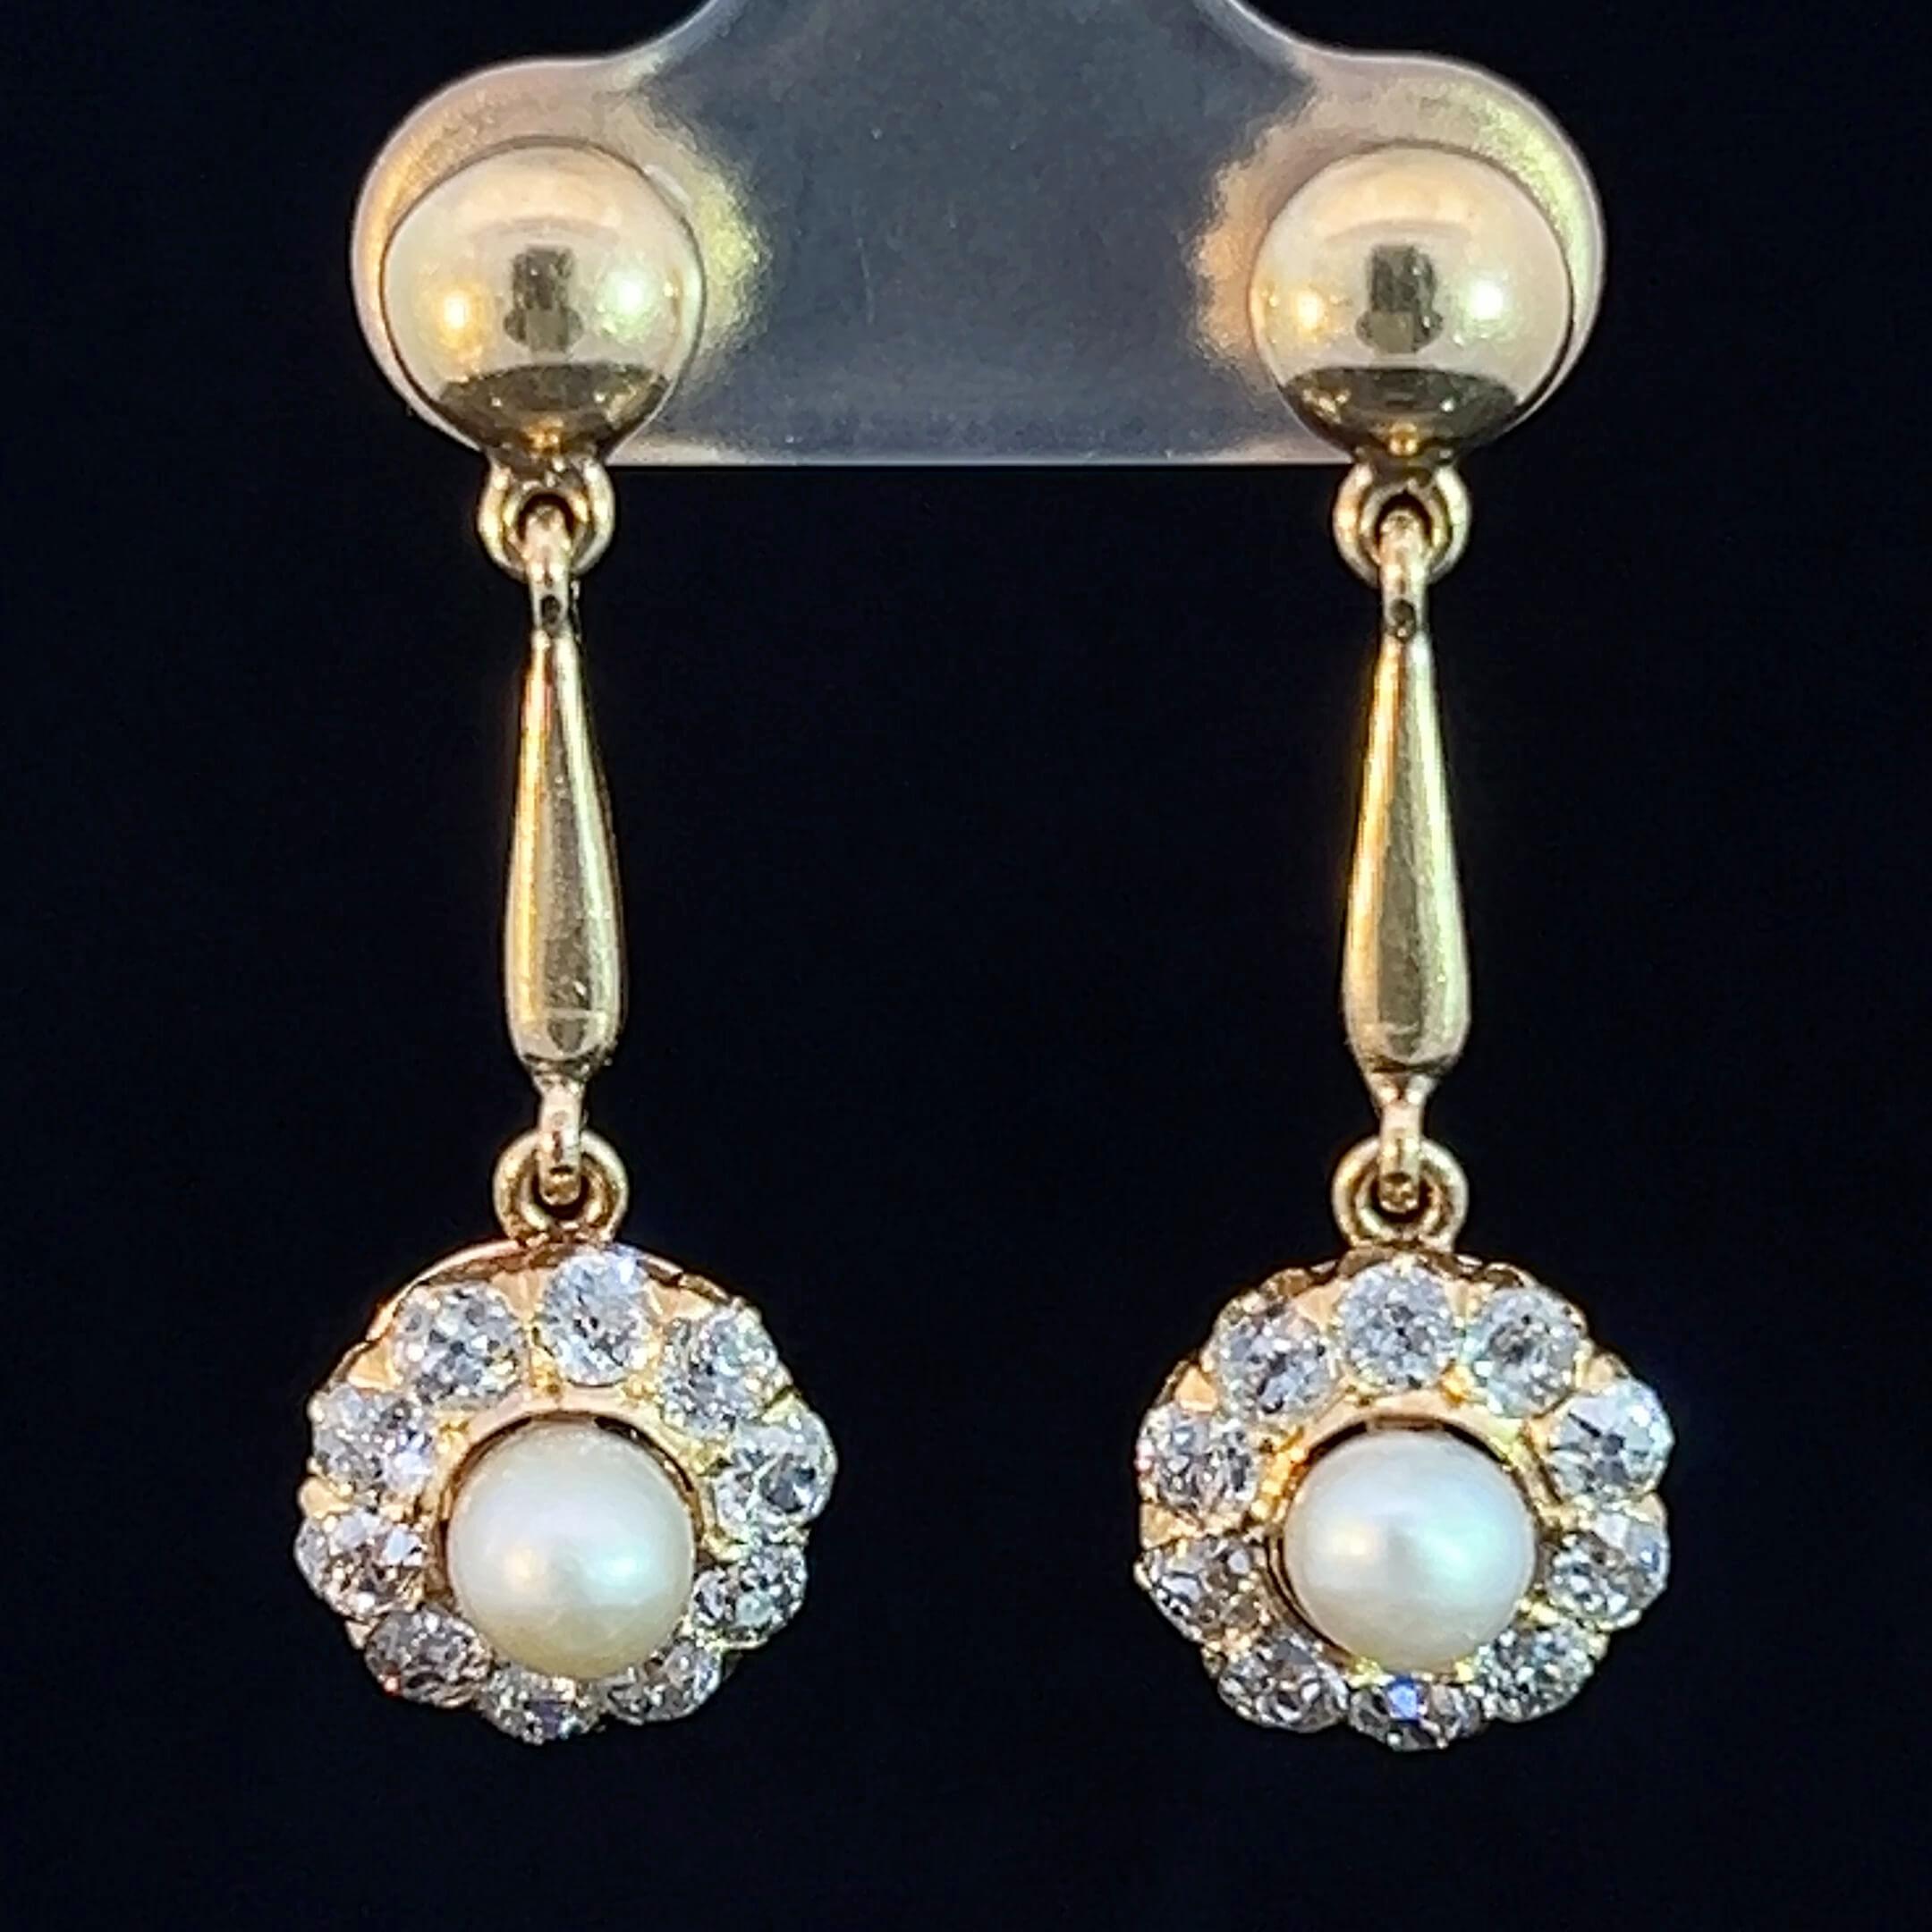 Old European Cut Edwardian Diamond and Pearl Earrings Circa 1900s